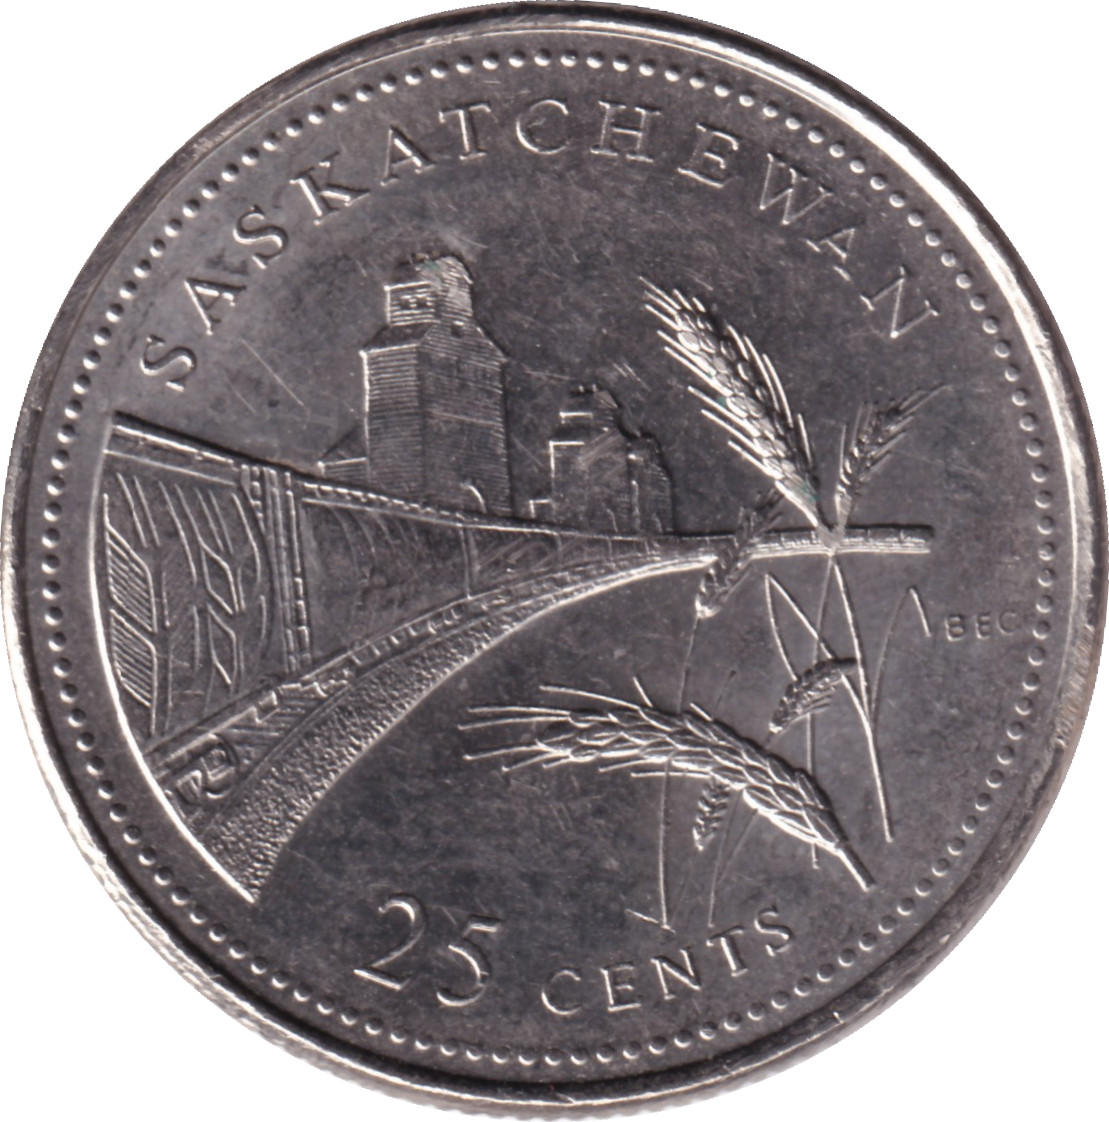 25 cents - Saskatchewan